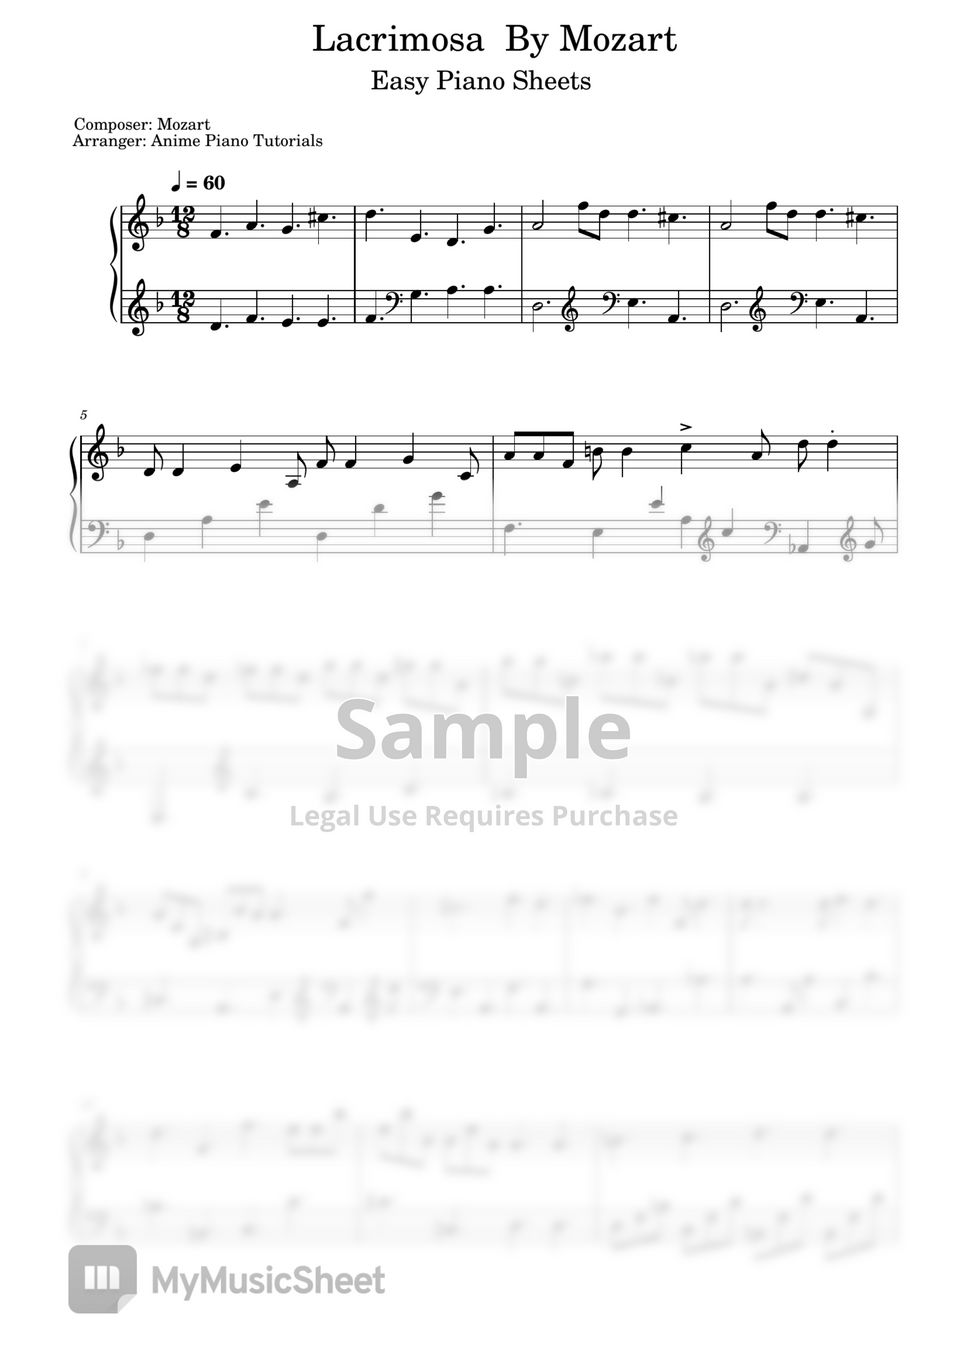 Mozart - Lacrimosa (EASY) by Anime Piano Tutorials